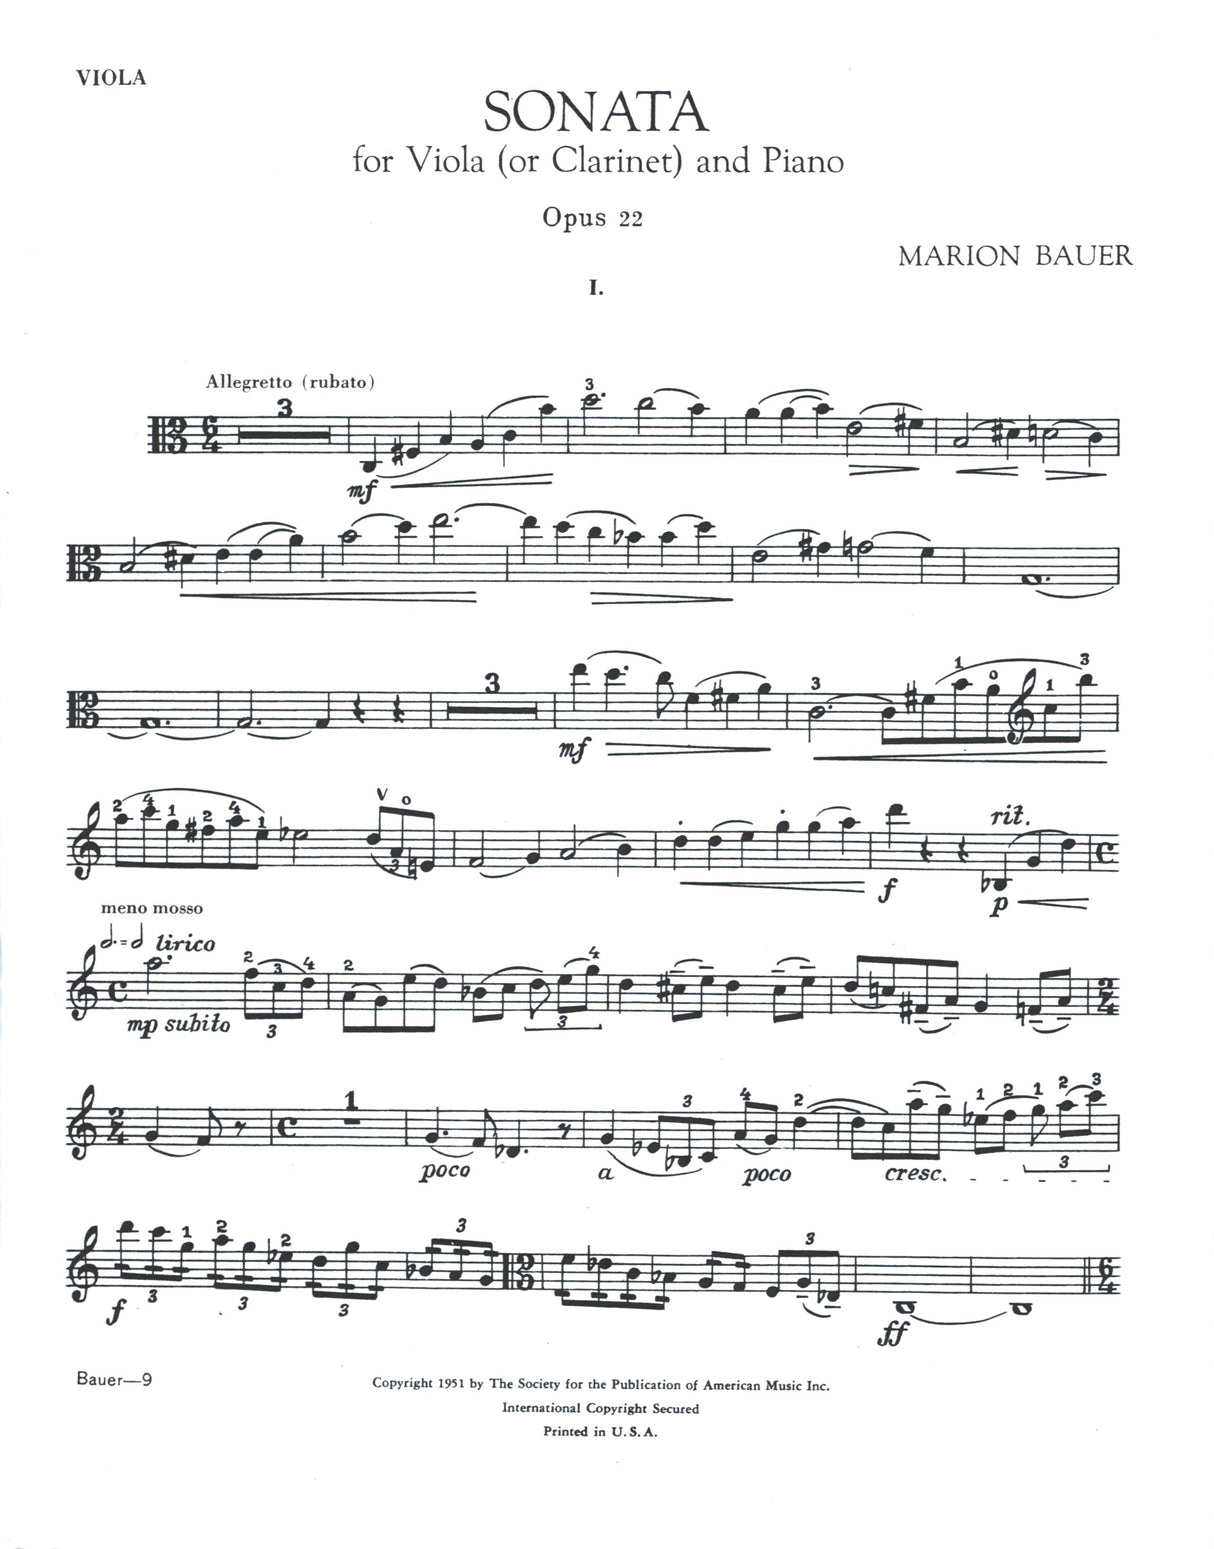 Bauer: Sonata for Viola (or Clarinet) and Piano